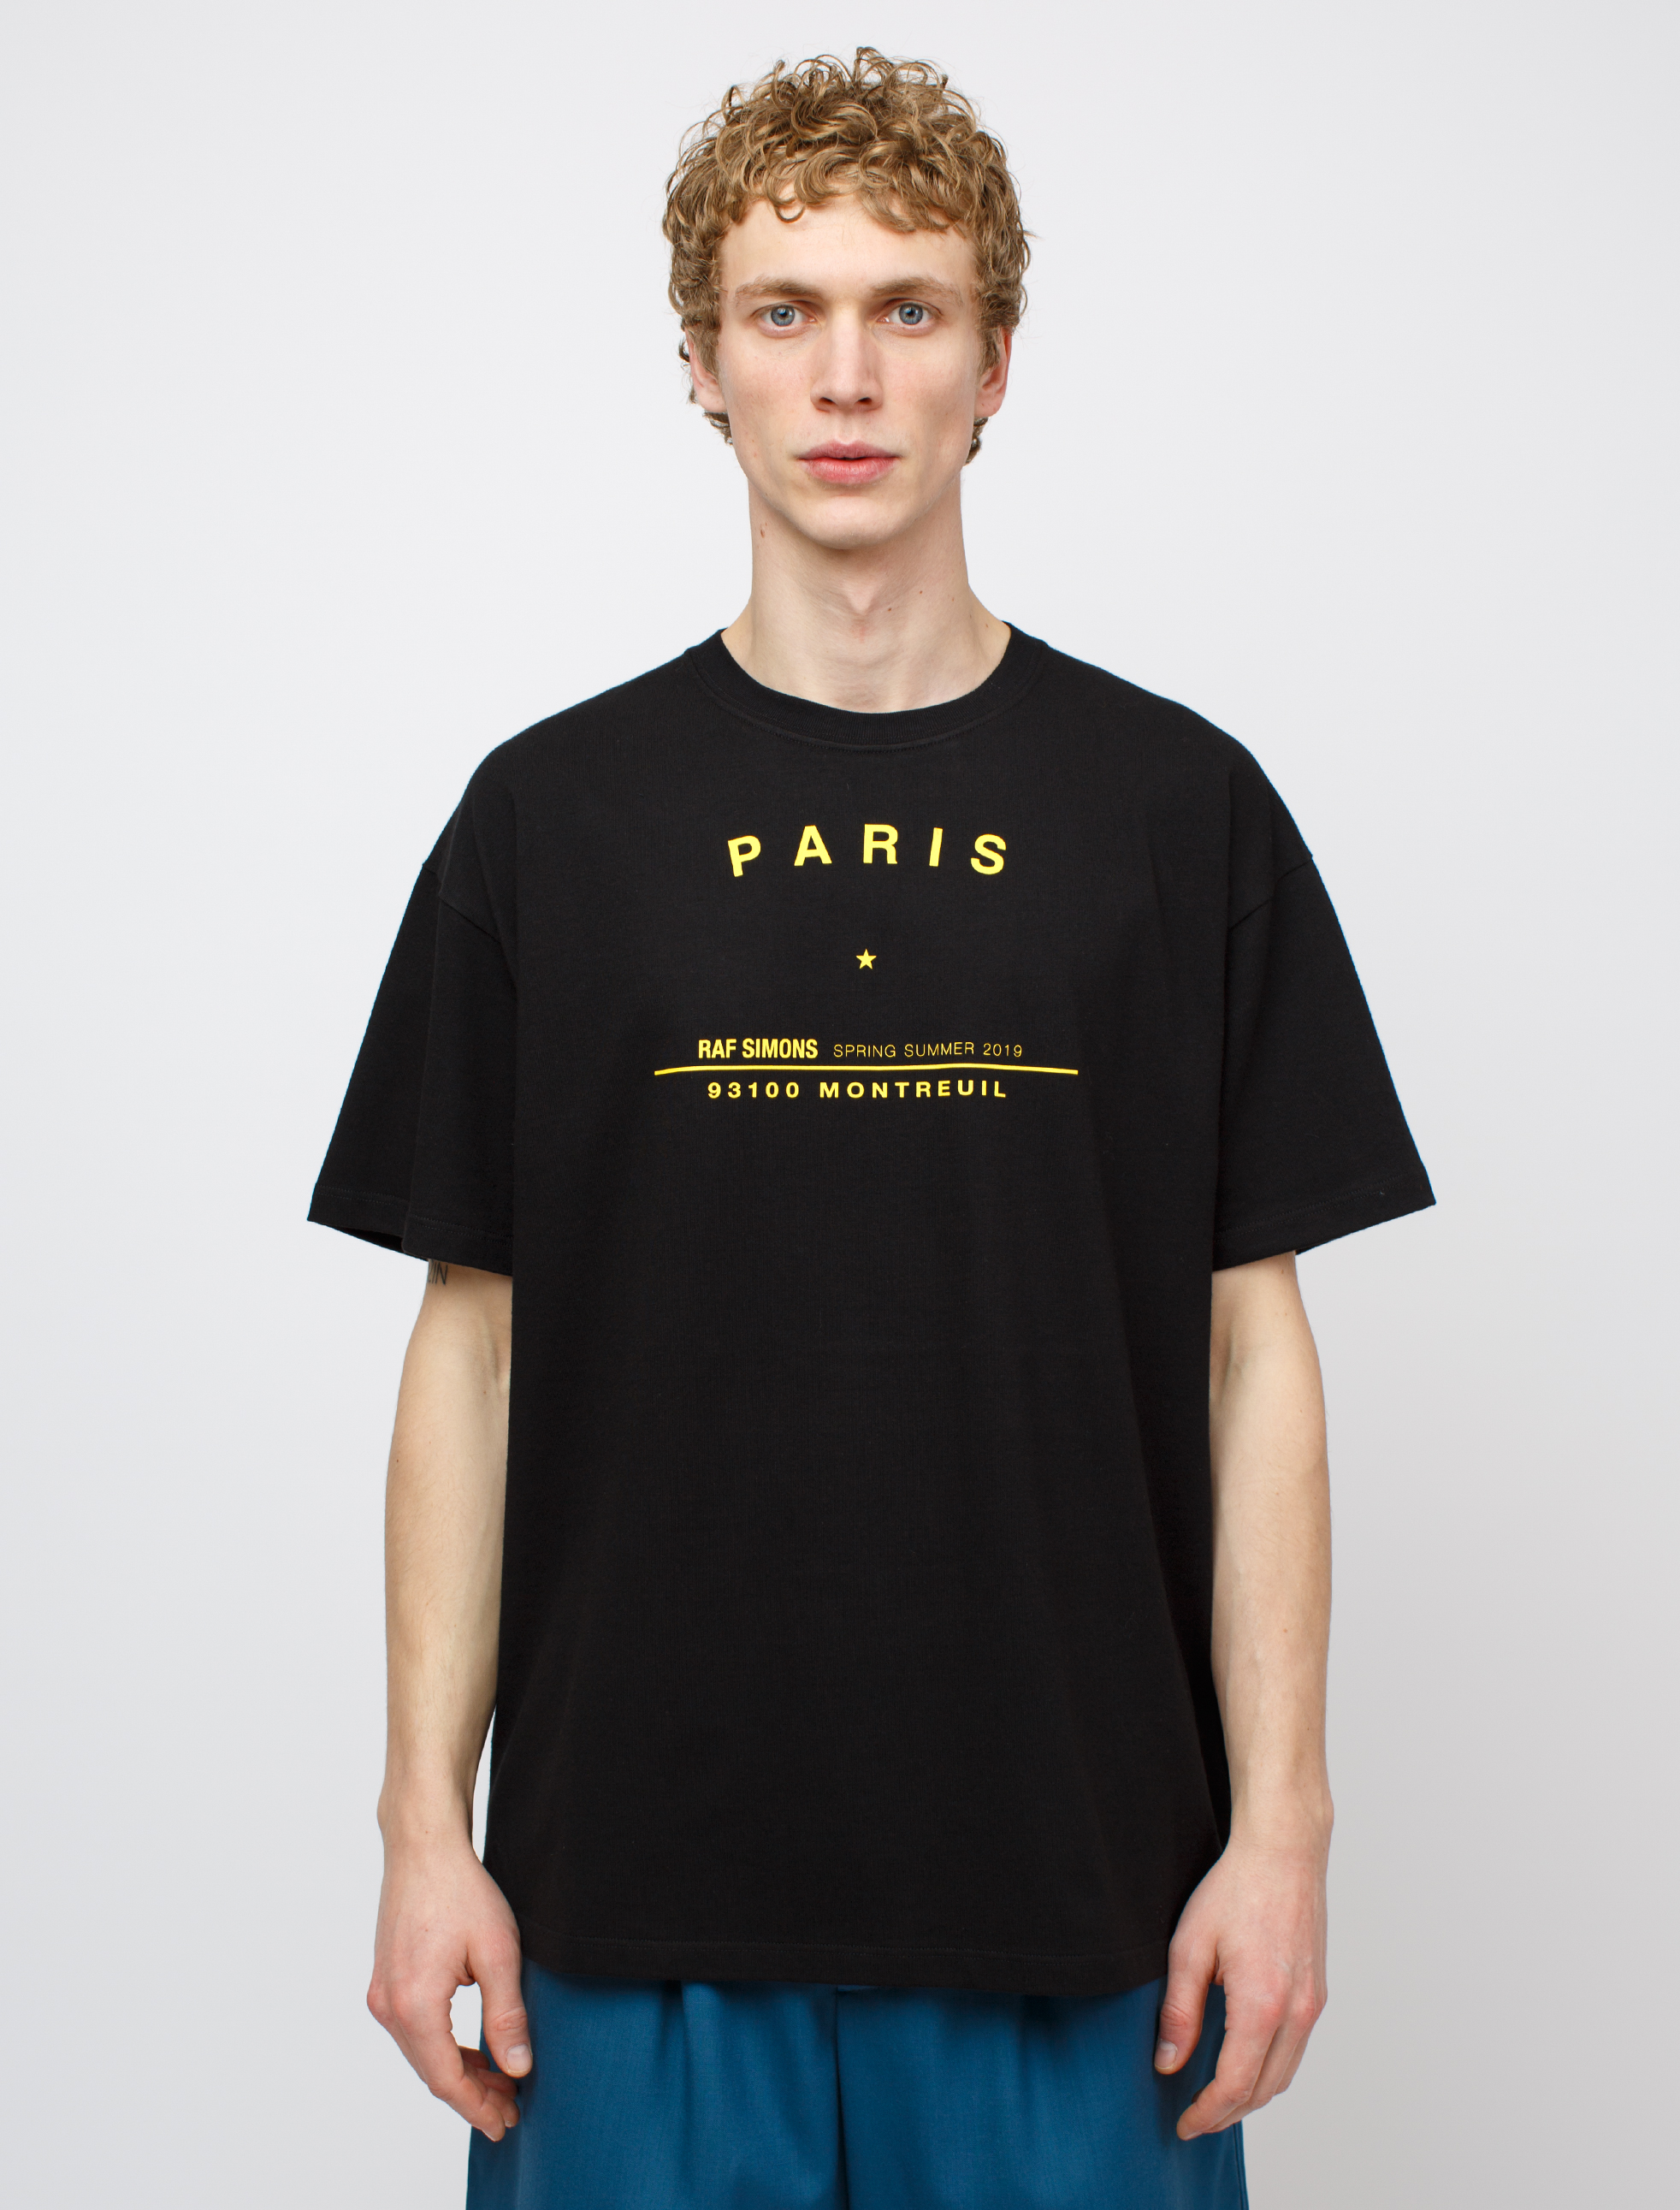 Raf Simons Big Fit Tour T-Shirt | Voo Store Berlin | Worldwide Shipping